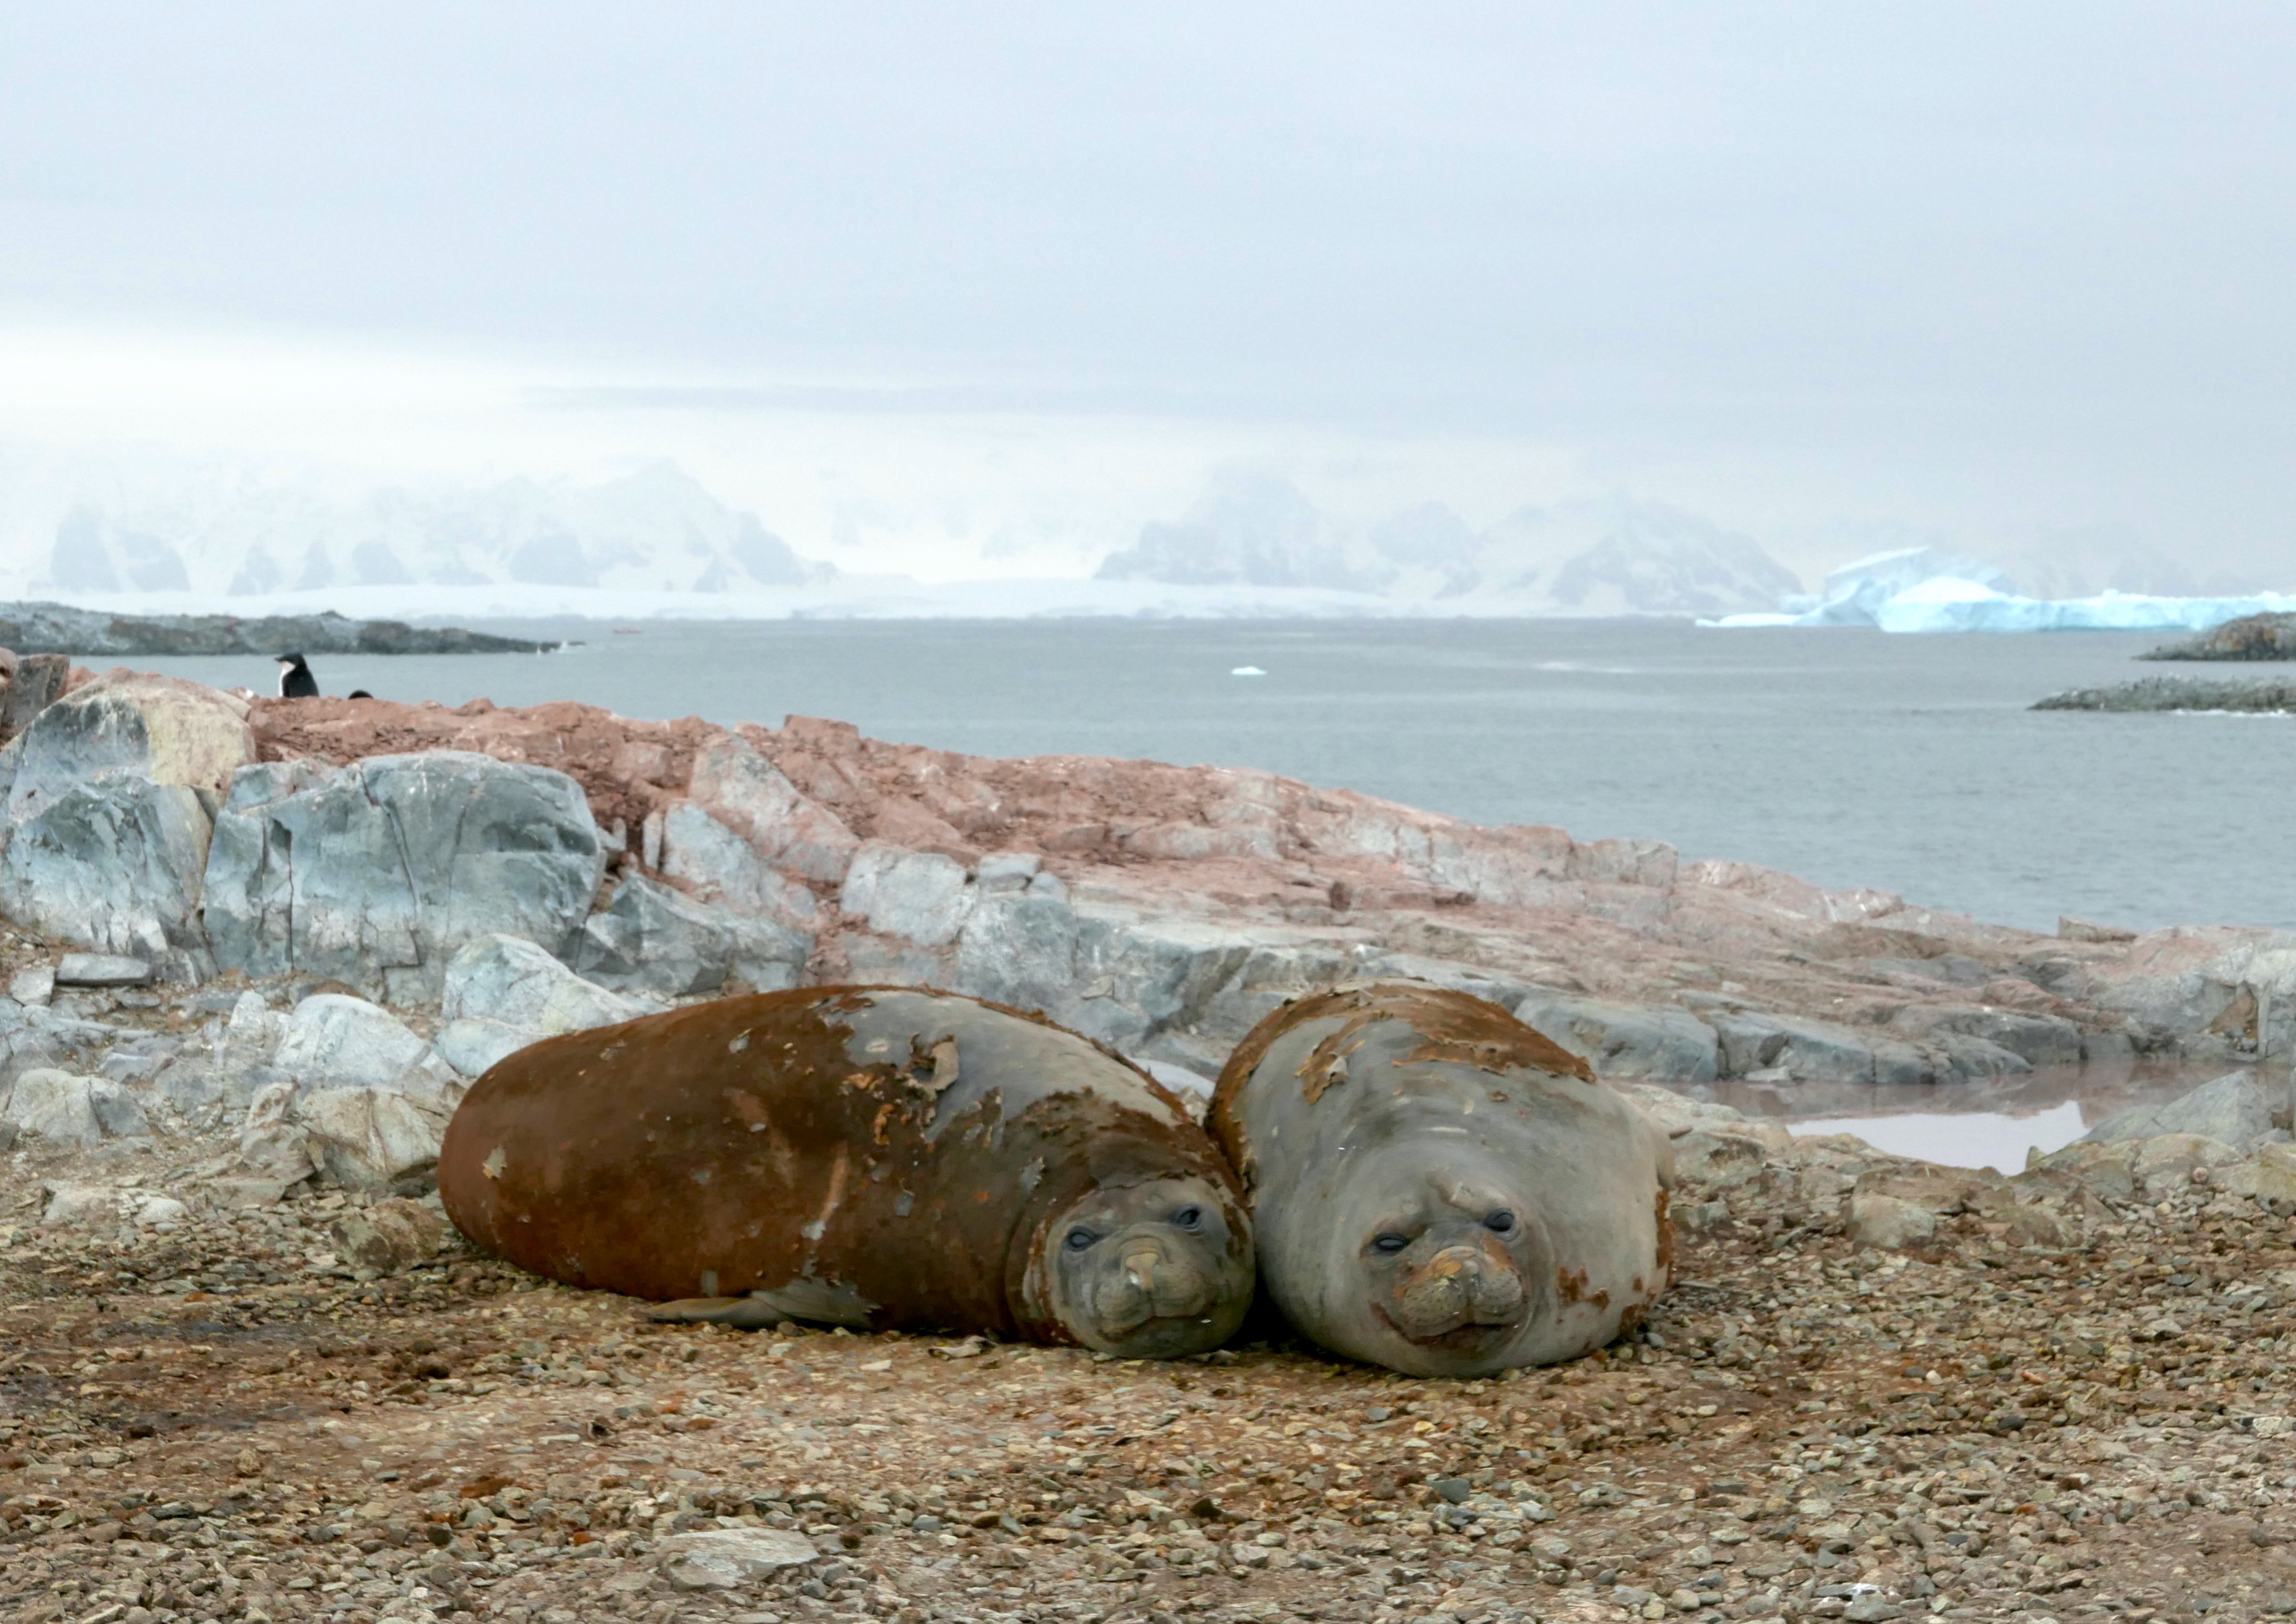 Southern Elephant seals dozing